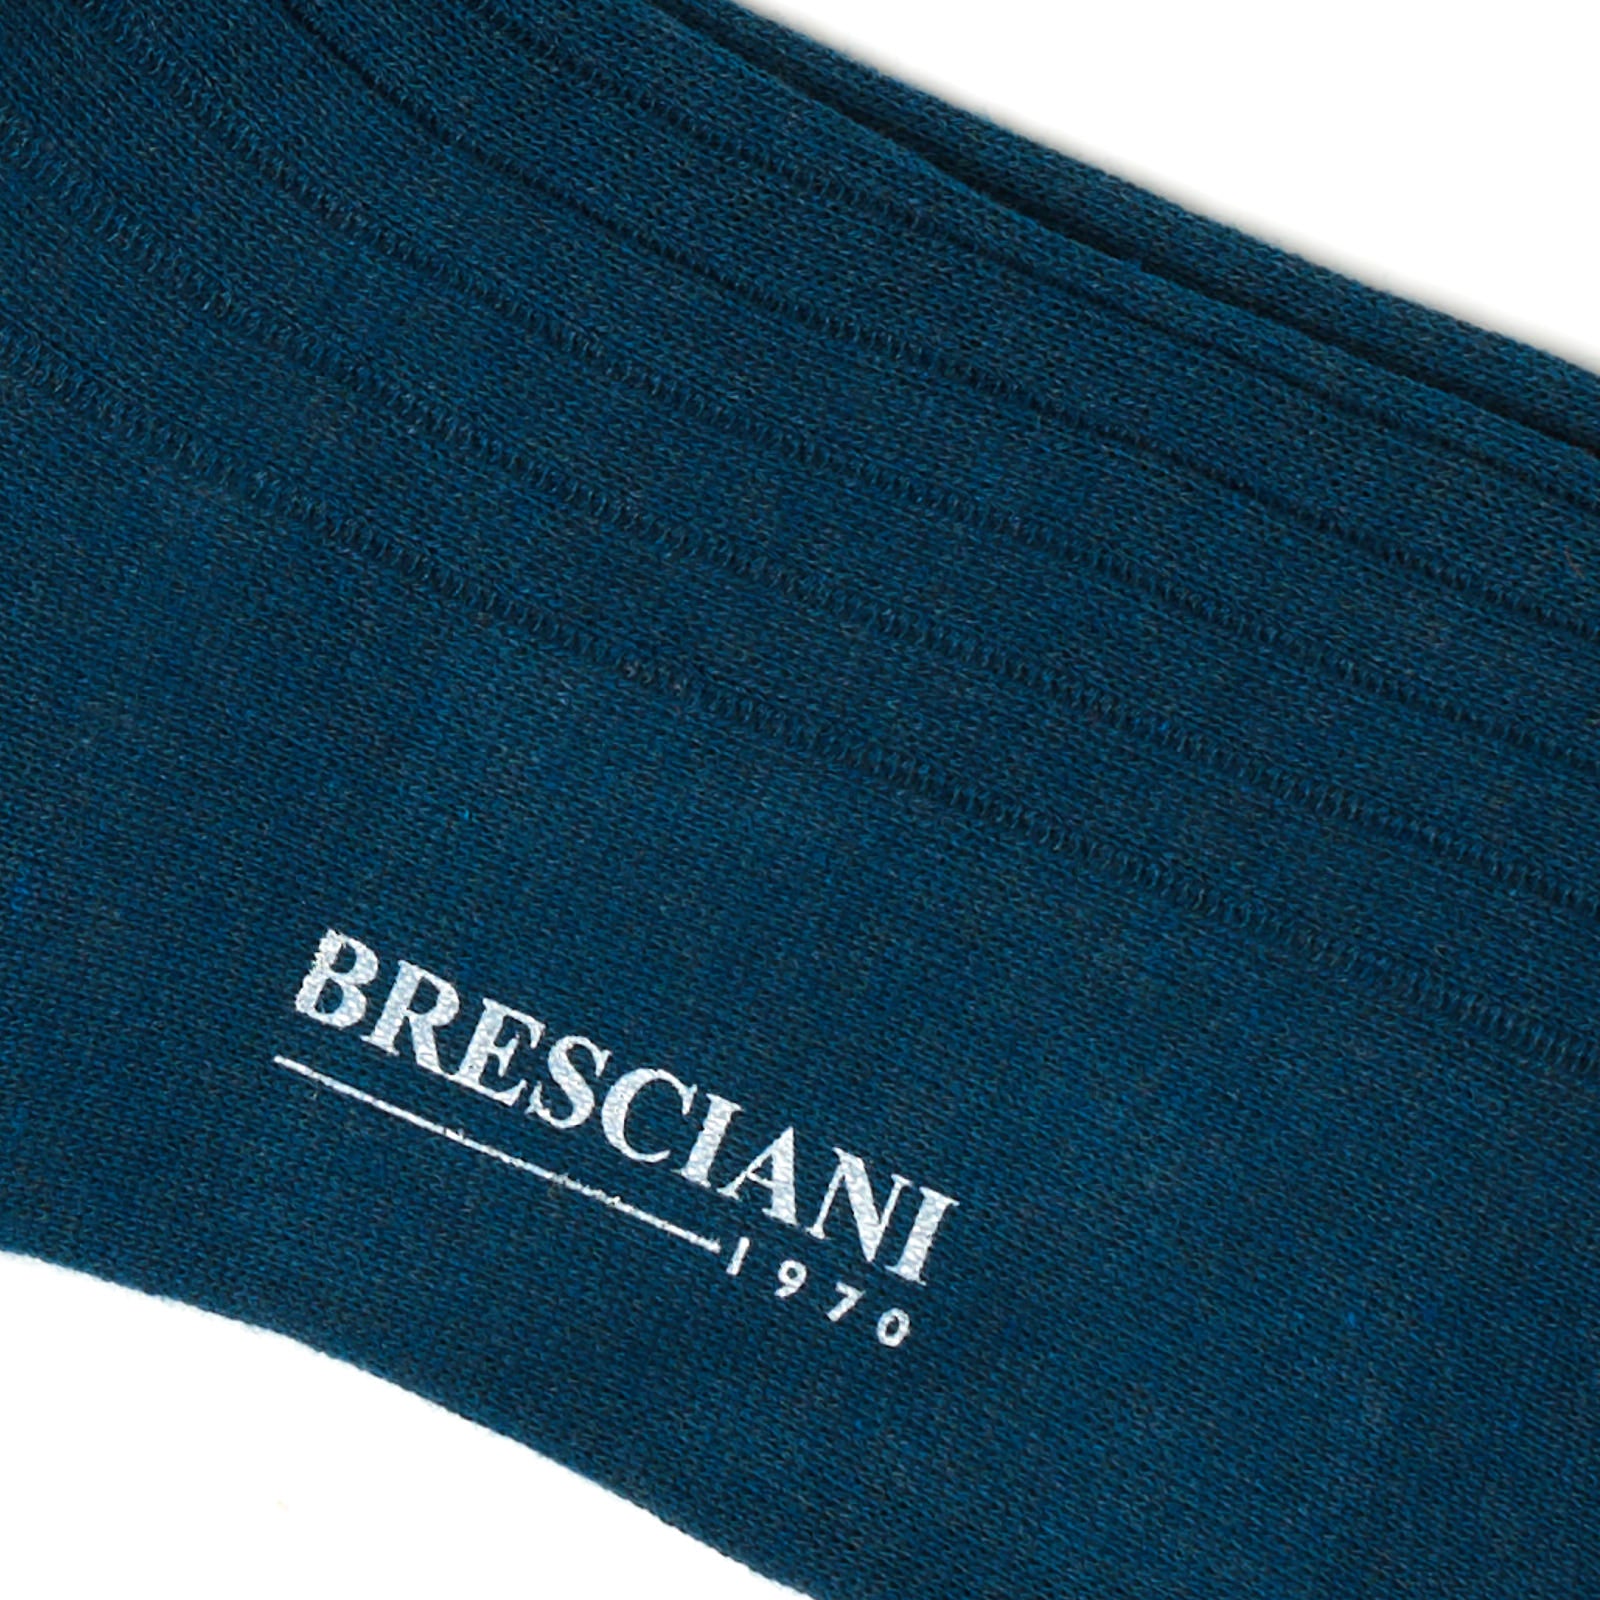 BRESCIANI Recycled Cotton Blend Mid Calf Length Socks M-L